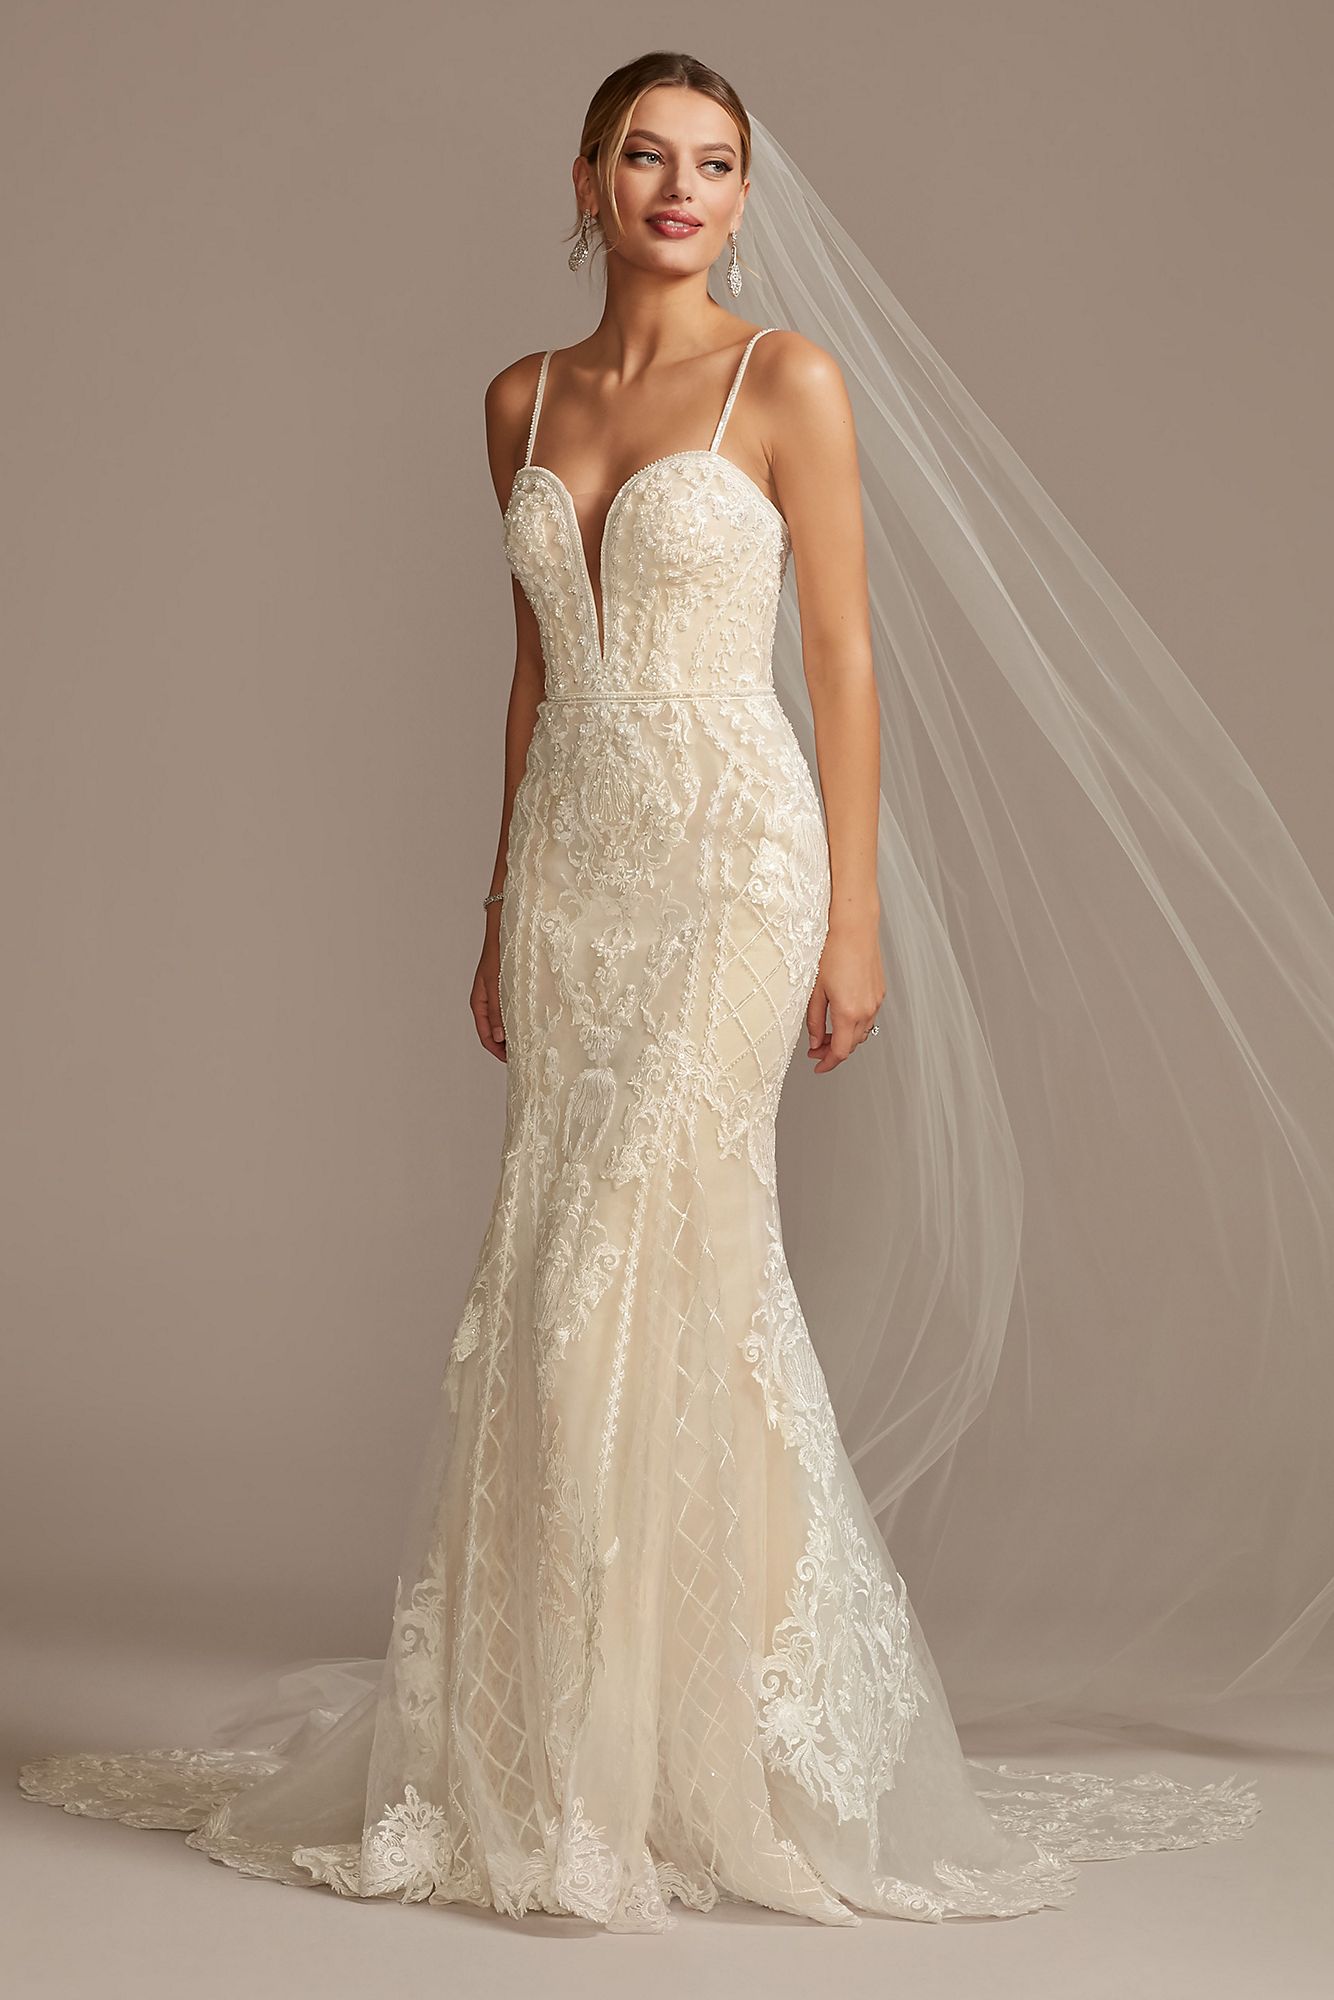 Beaded Scroll and Lace Mermaid Wedding Dress CWG878